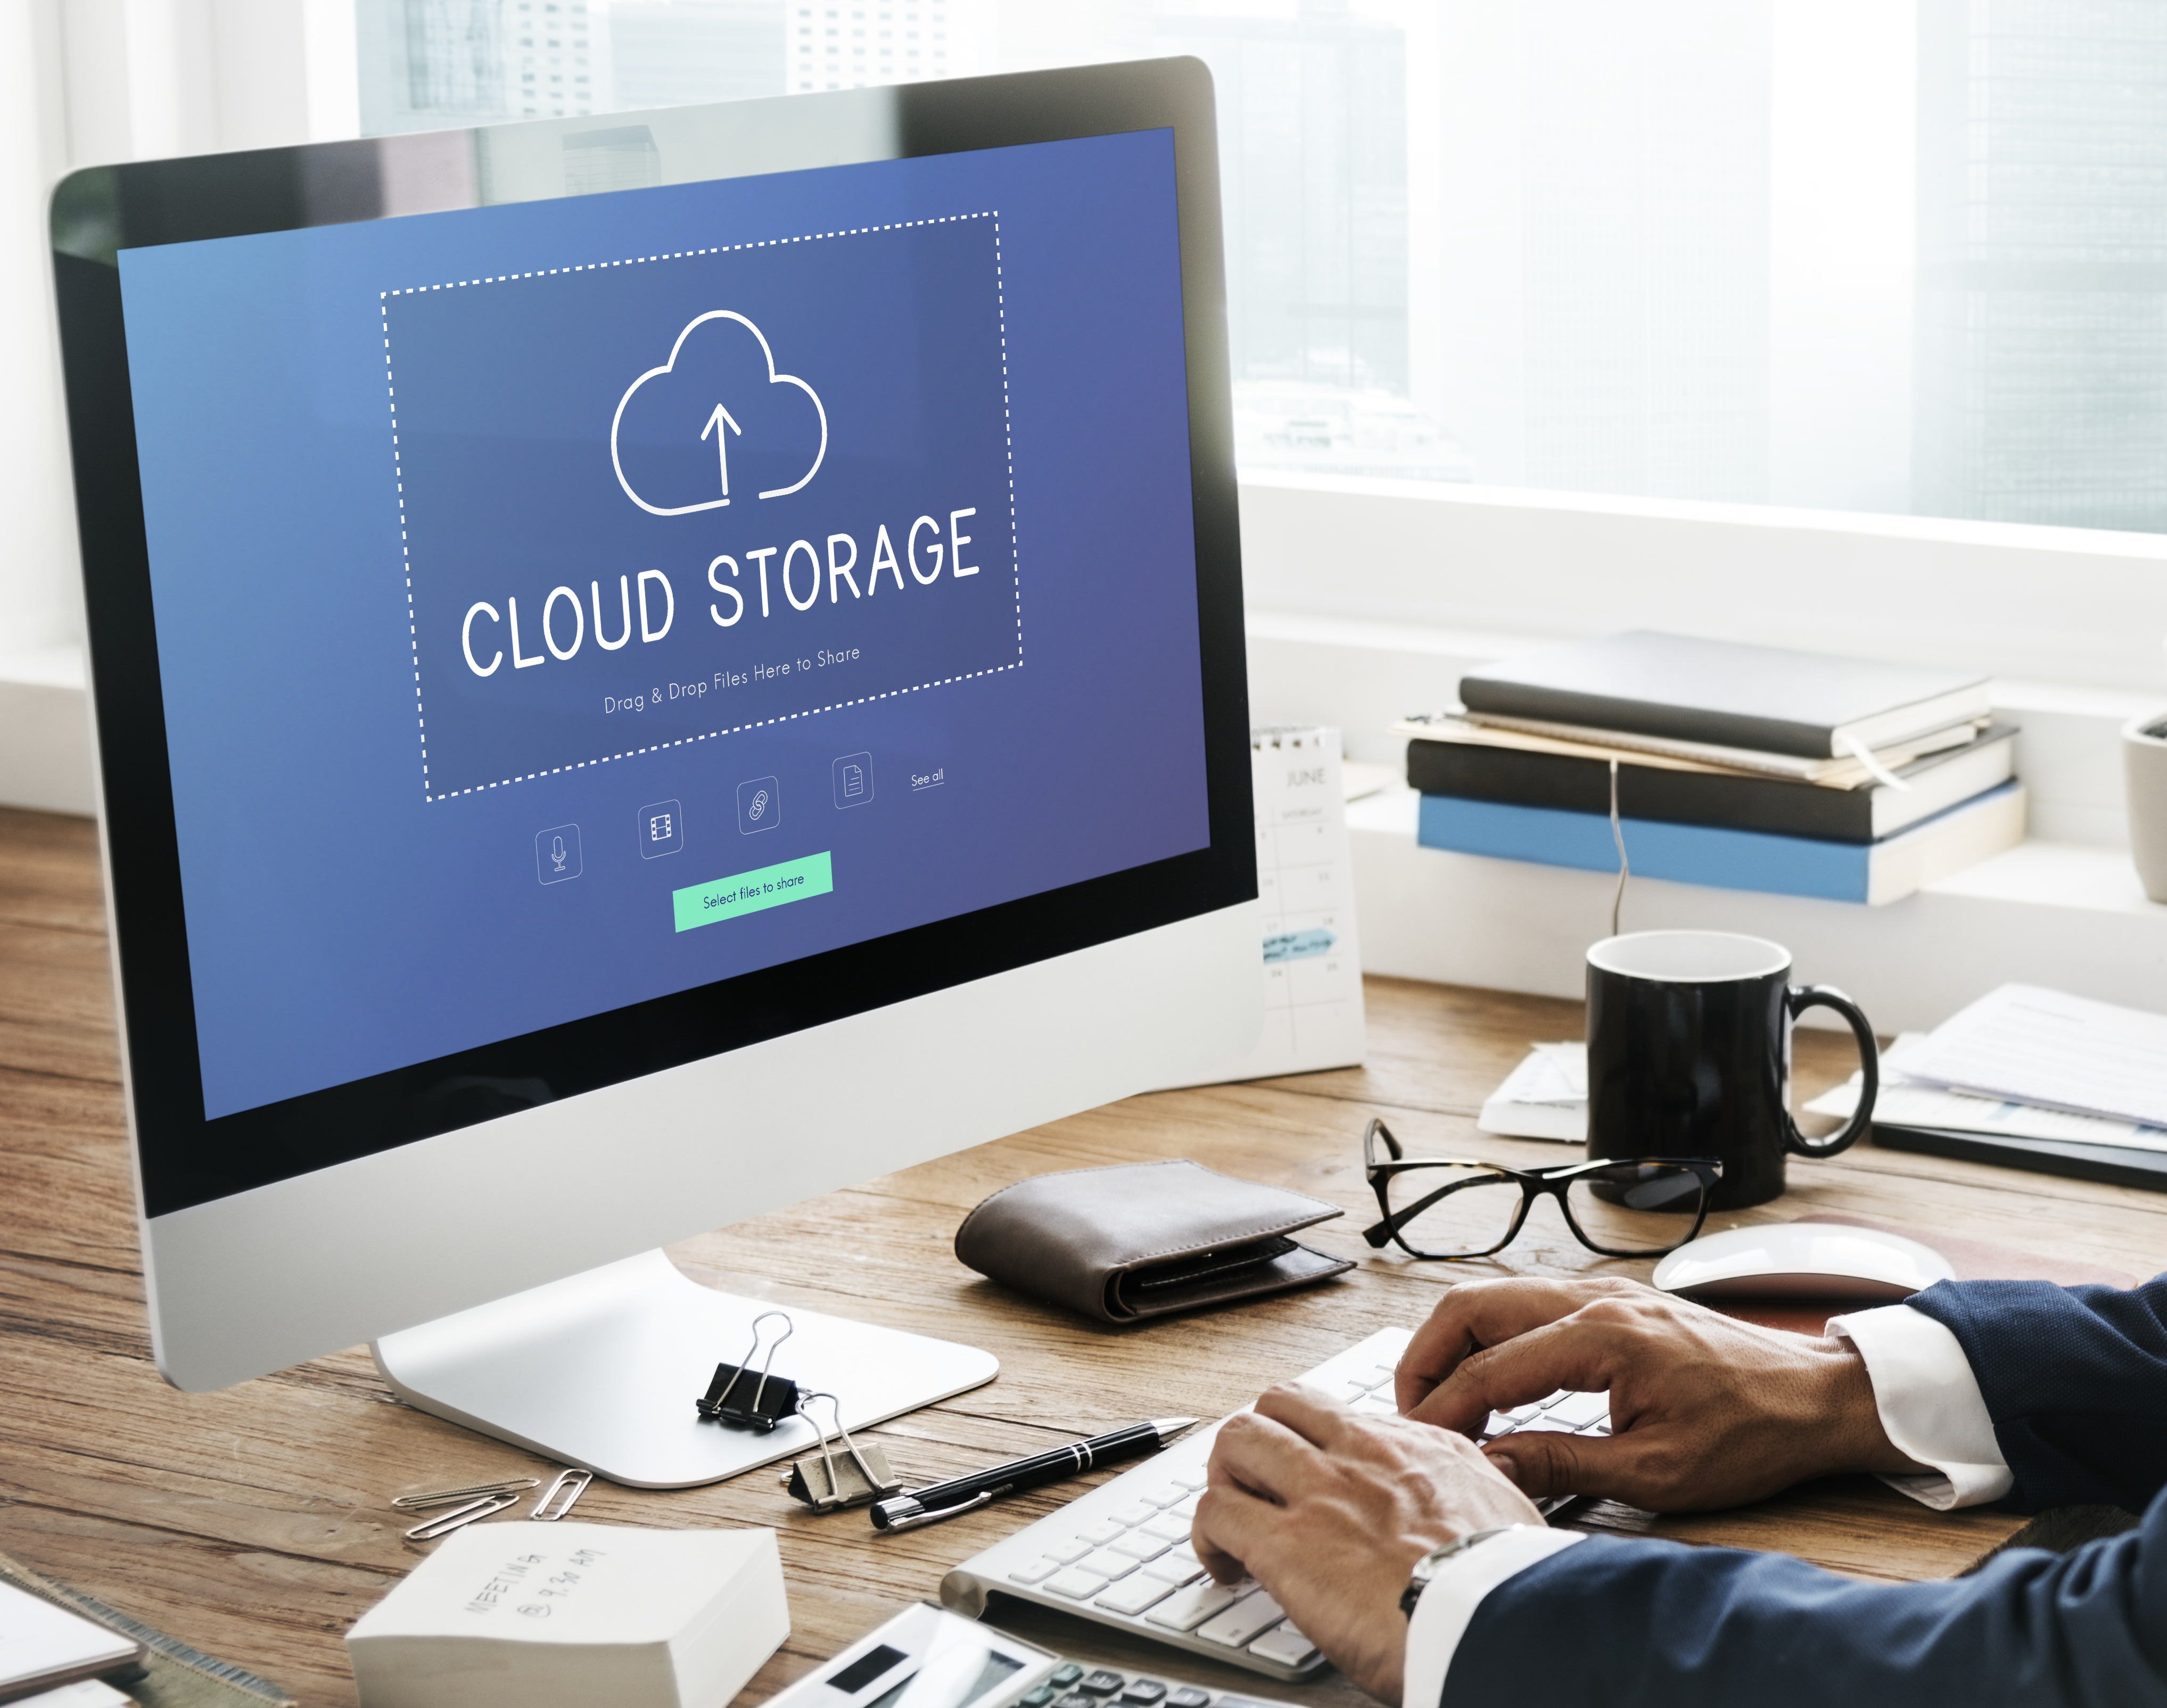 Cloud Storage Upload And Download Data Management 2022 09 16 08 30 38 Utc